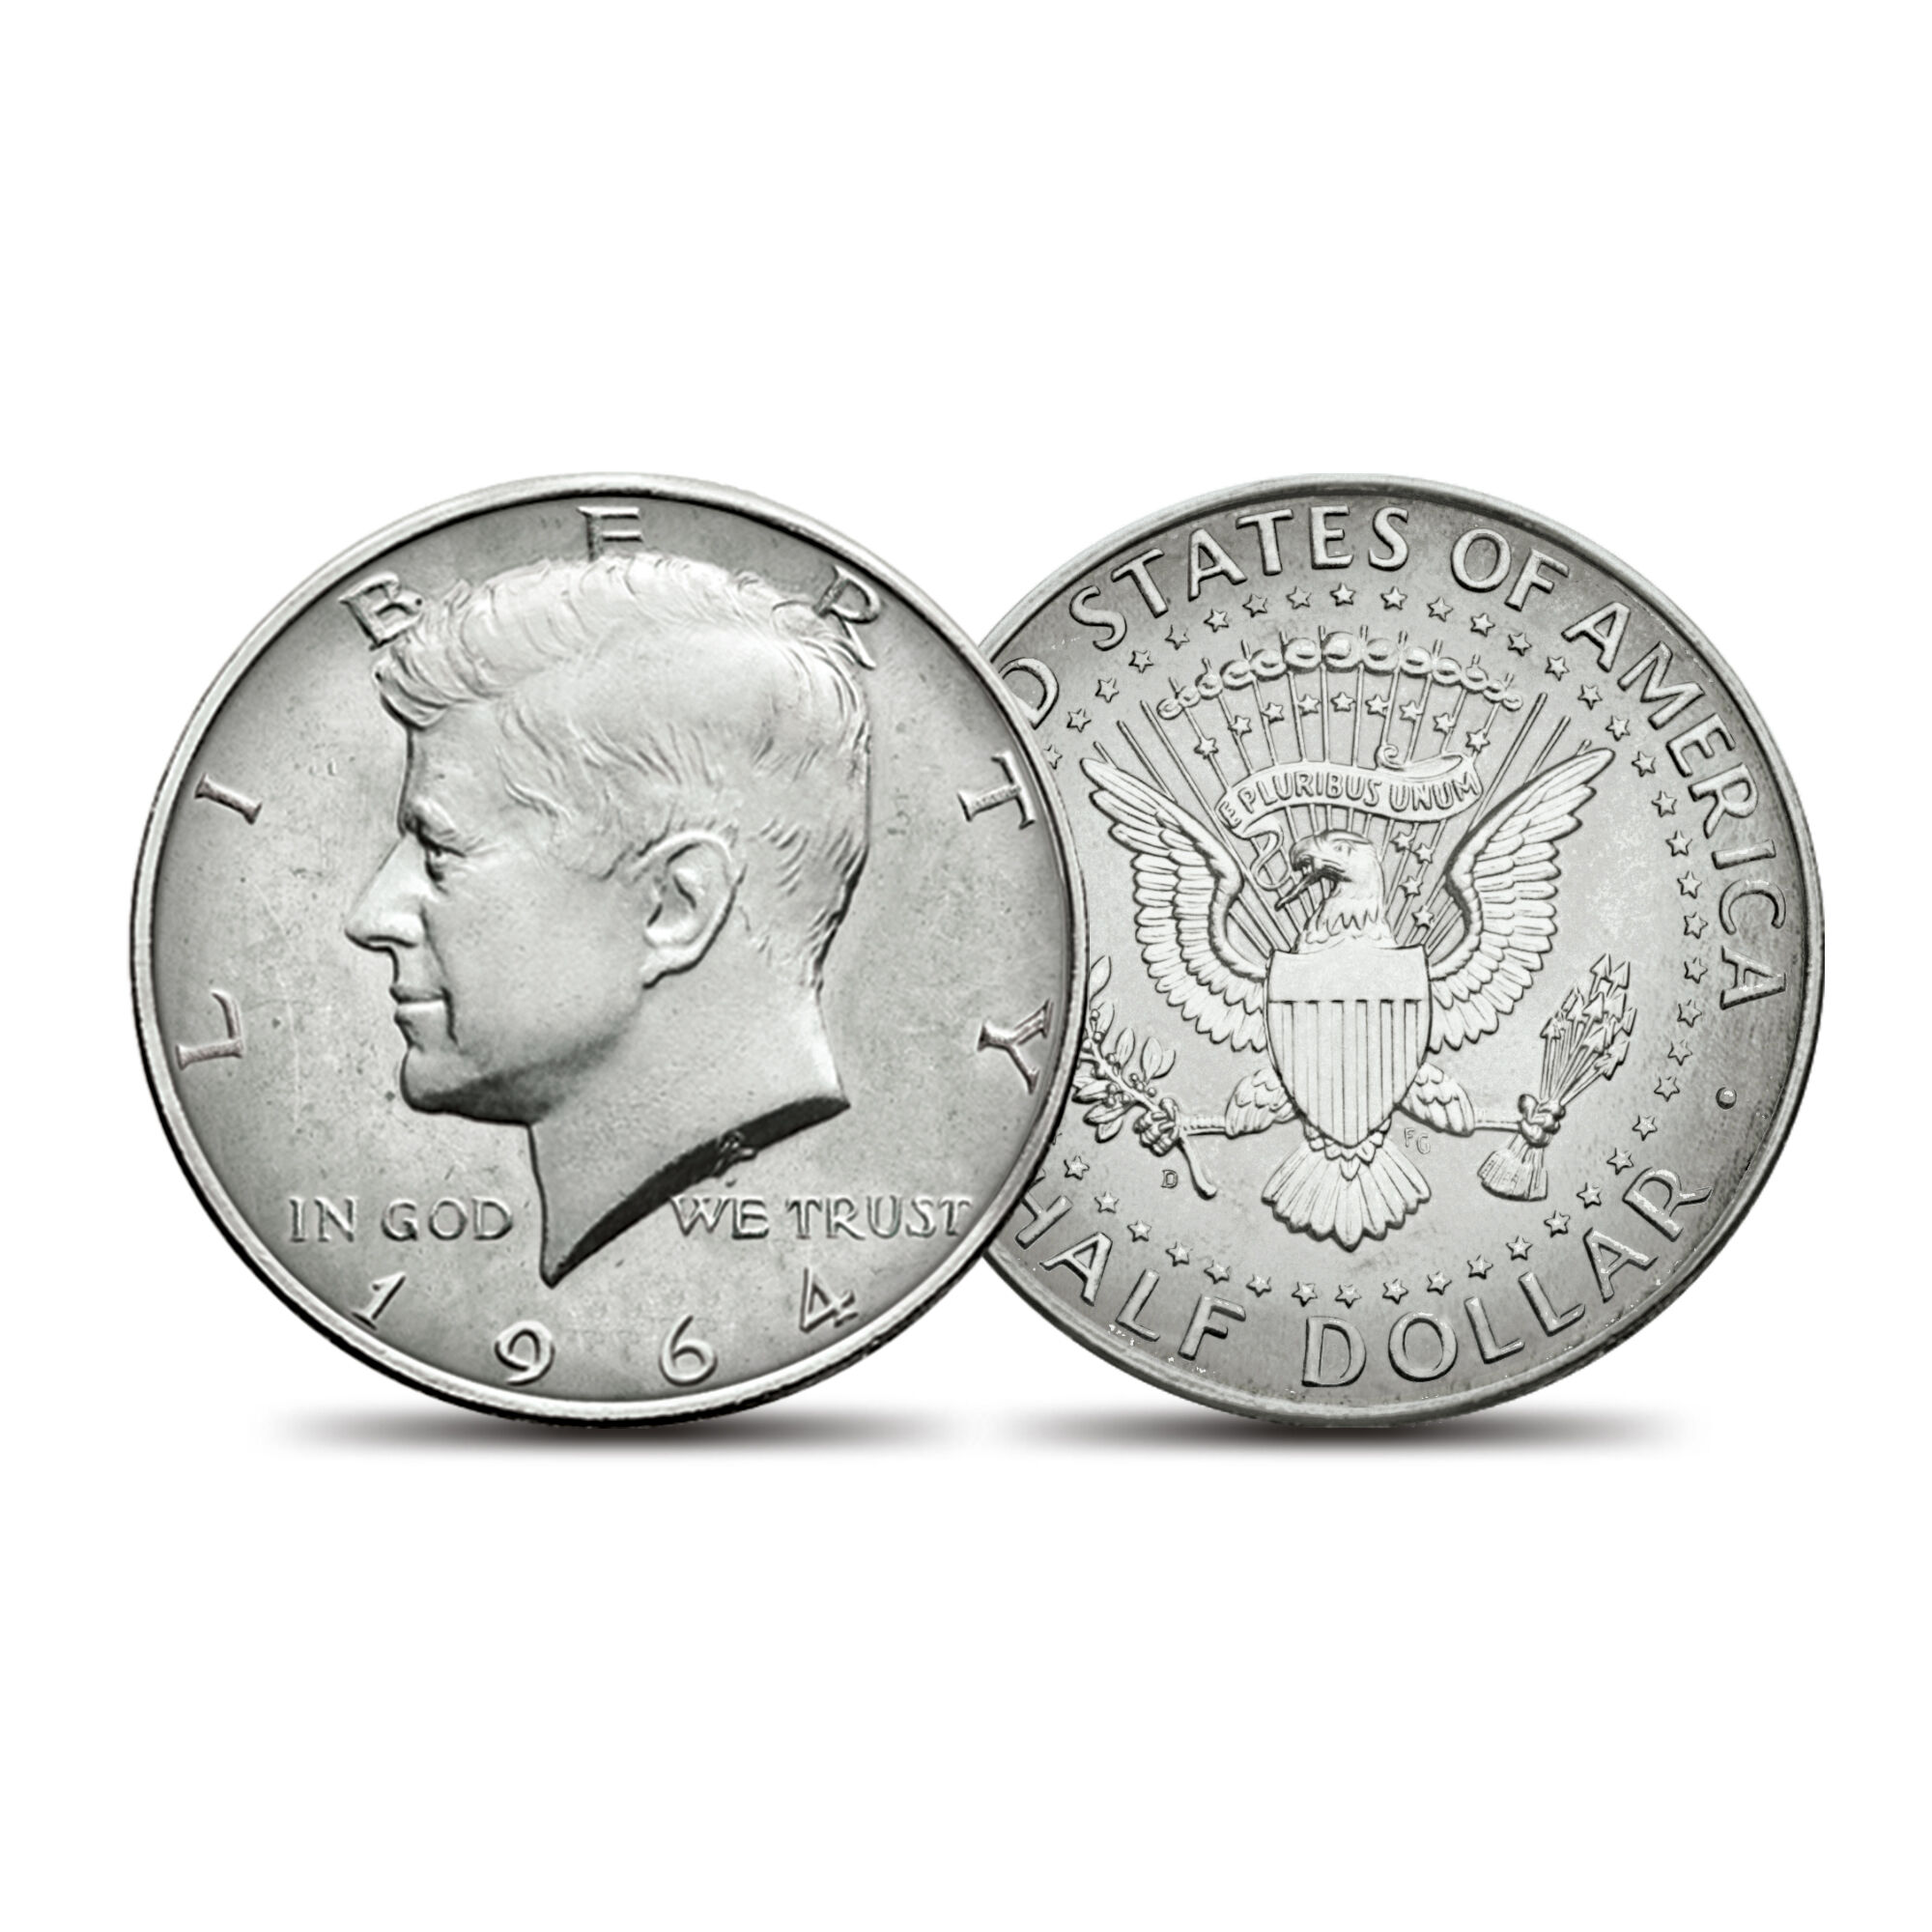 The Last U.S. Silver Half Dollars of the 20th Century 10545 0019 e coin